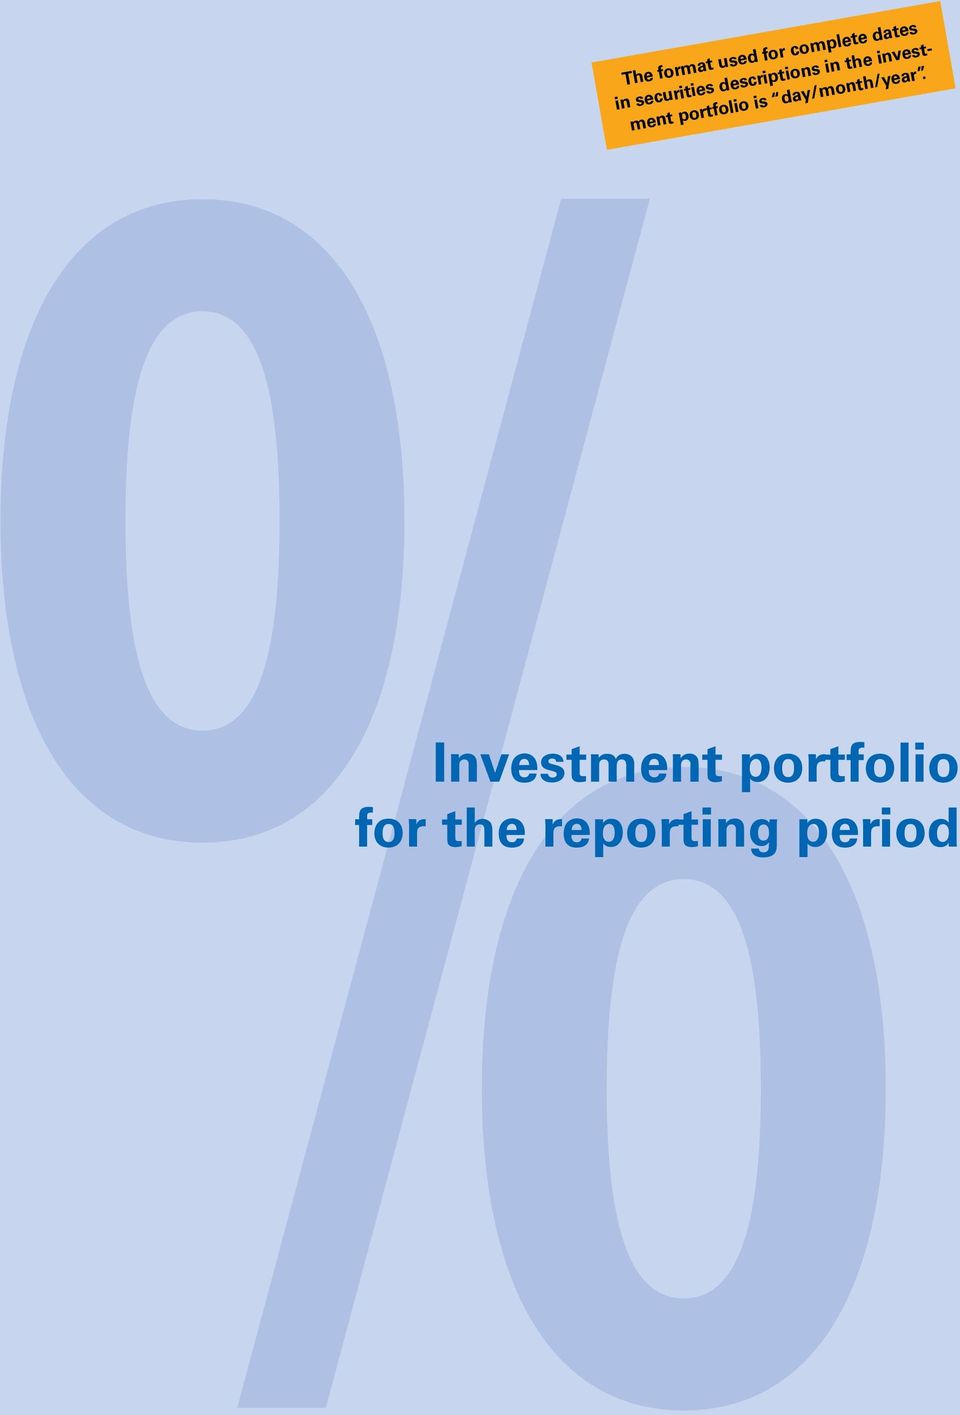 investment portfolio is day/month/year.